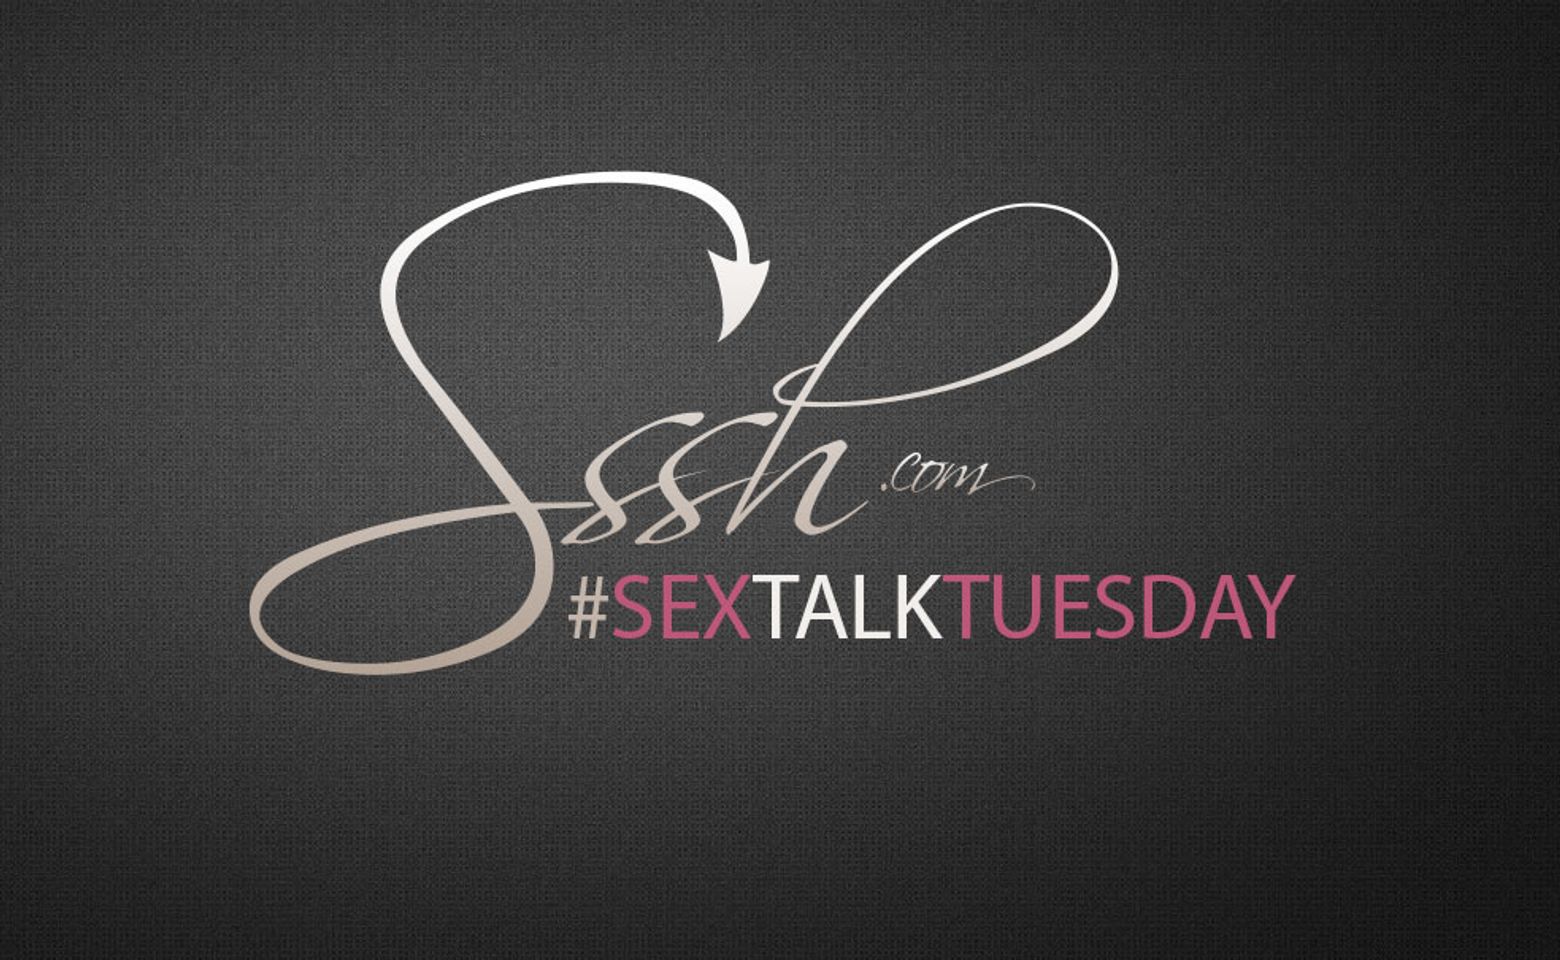 Andrew Blake Leads #SexTalkTuesday on April 18